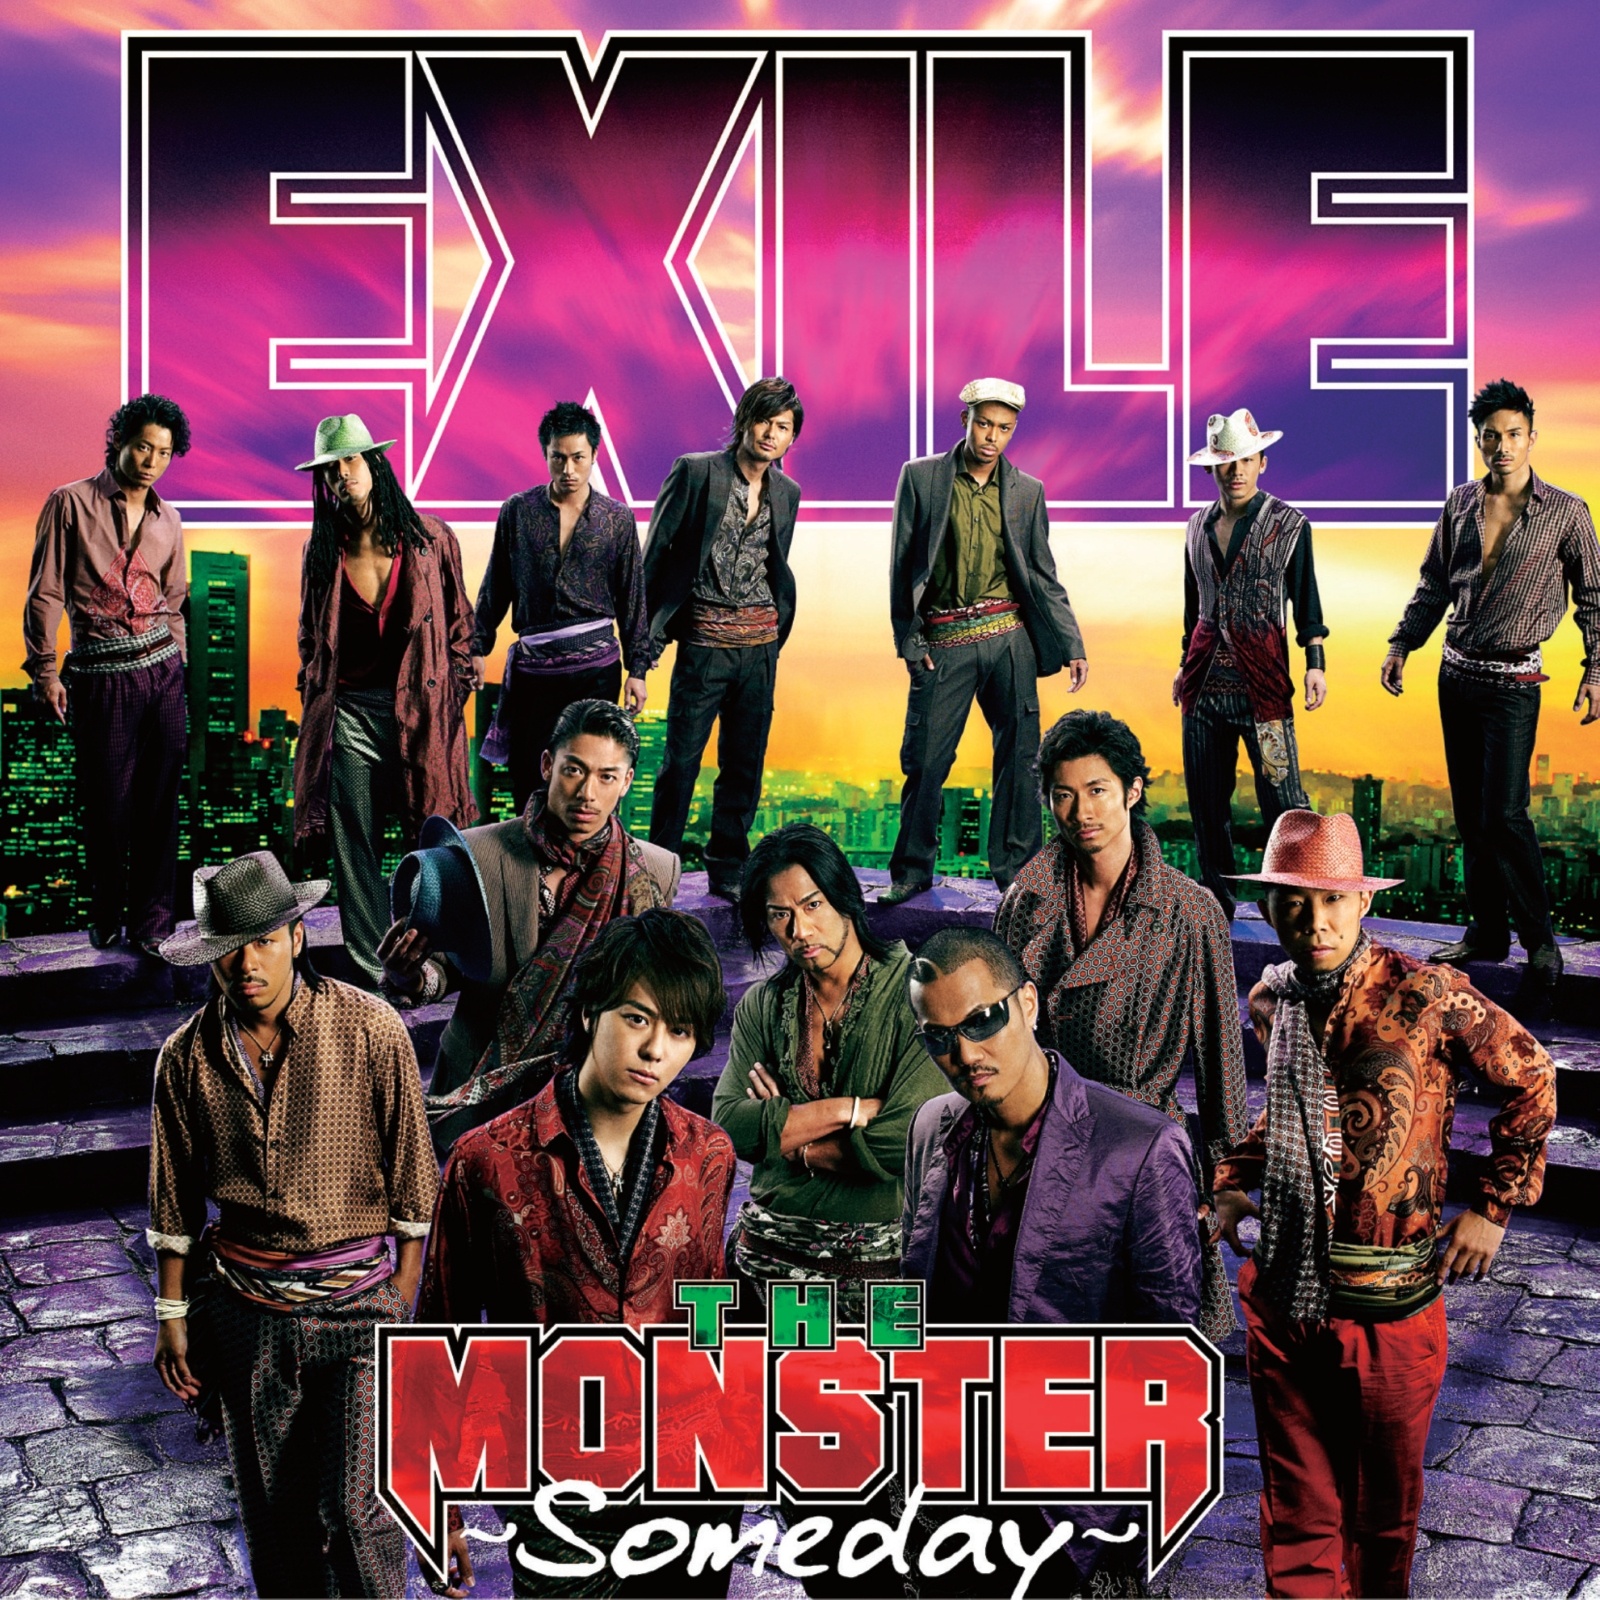 Someday(EXILE演唱歌曲)